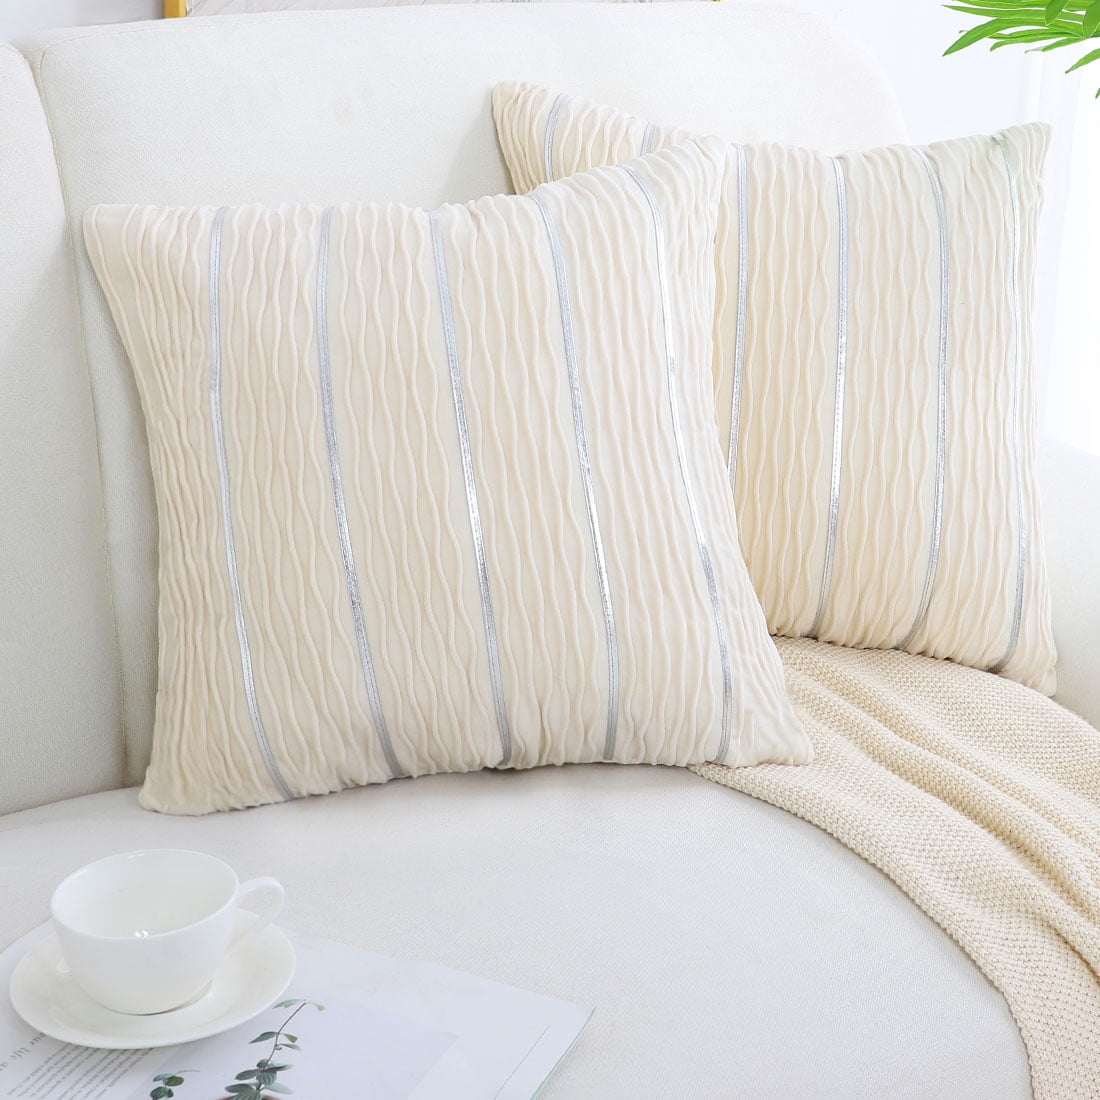 16-Inch Length Larkspur E by design Express Line Geometric Print Pillow